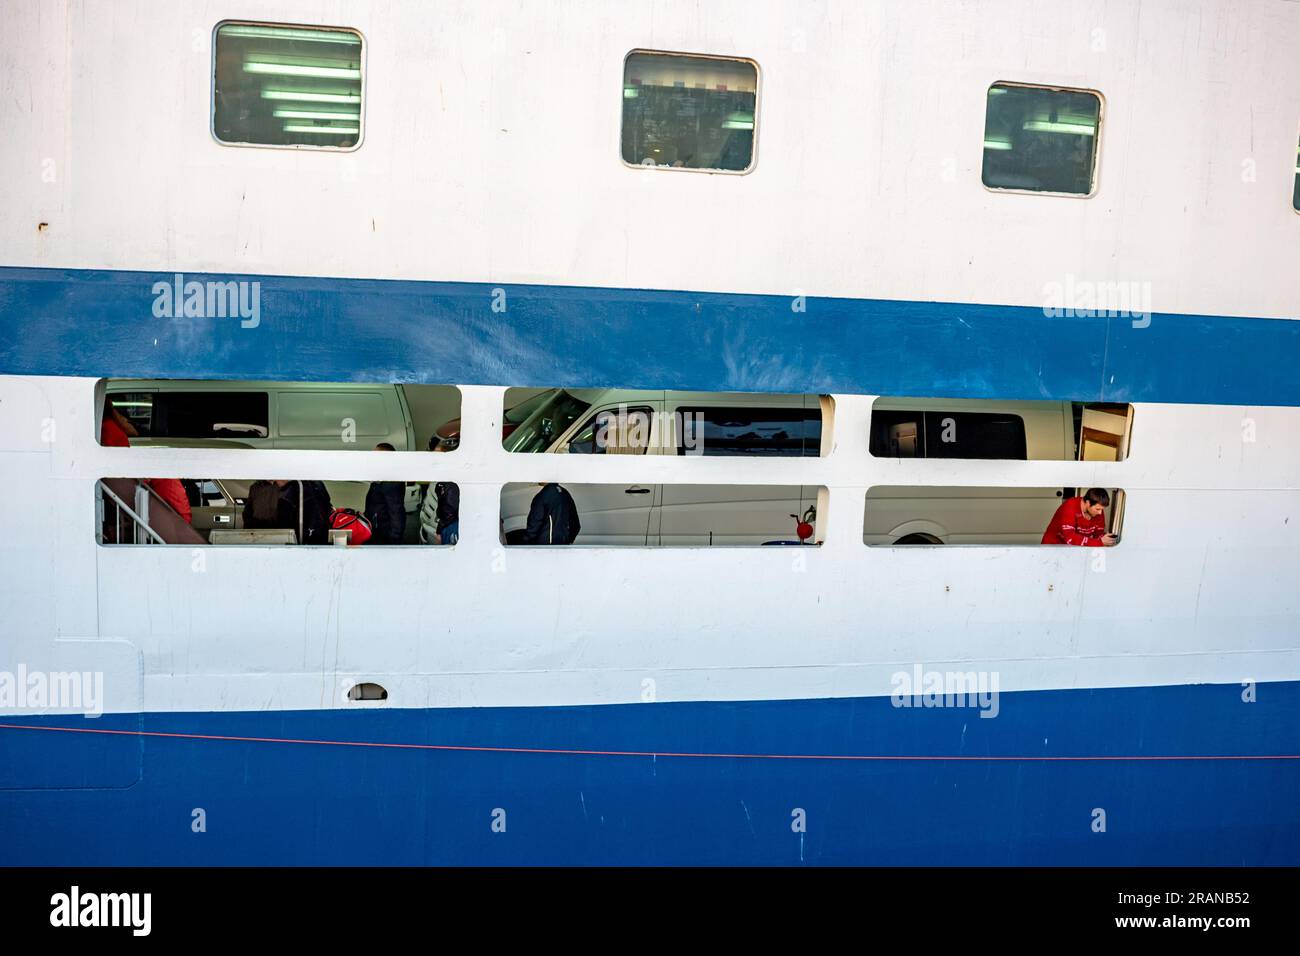 KERCH, CRIMEA - OCT. 2014: Port Krym. Kerchenskaya ferry crossing. Ferry 'Ionas' Stock Photo